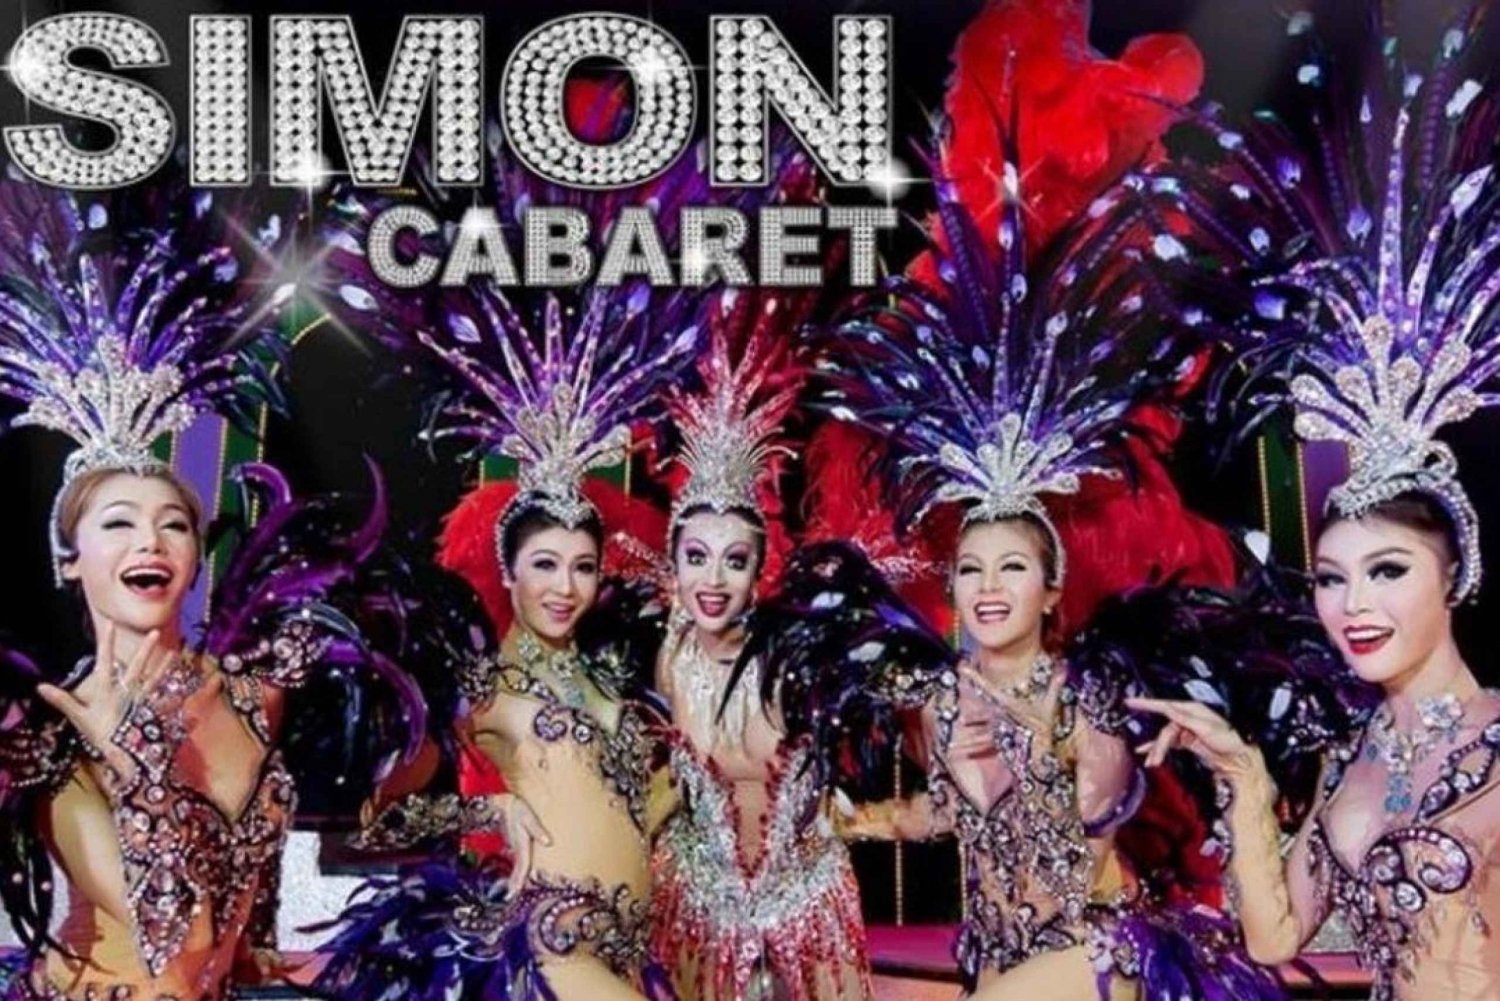 Phuket Simon Cabaret Show Ticket de entrada con transporte